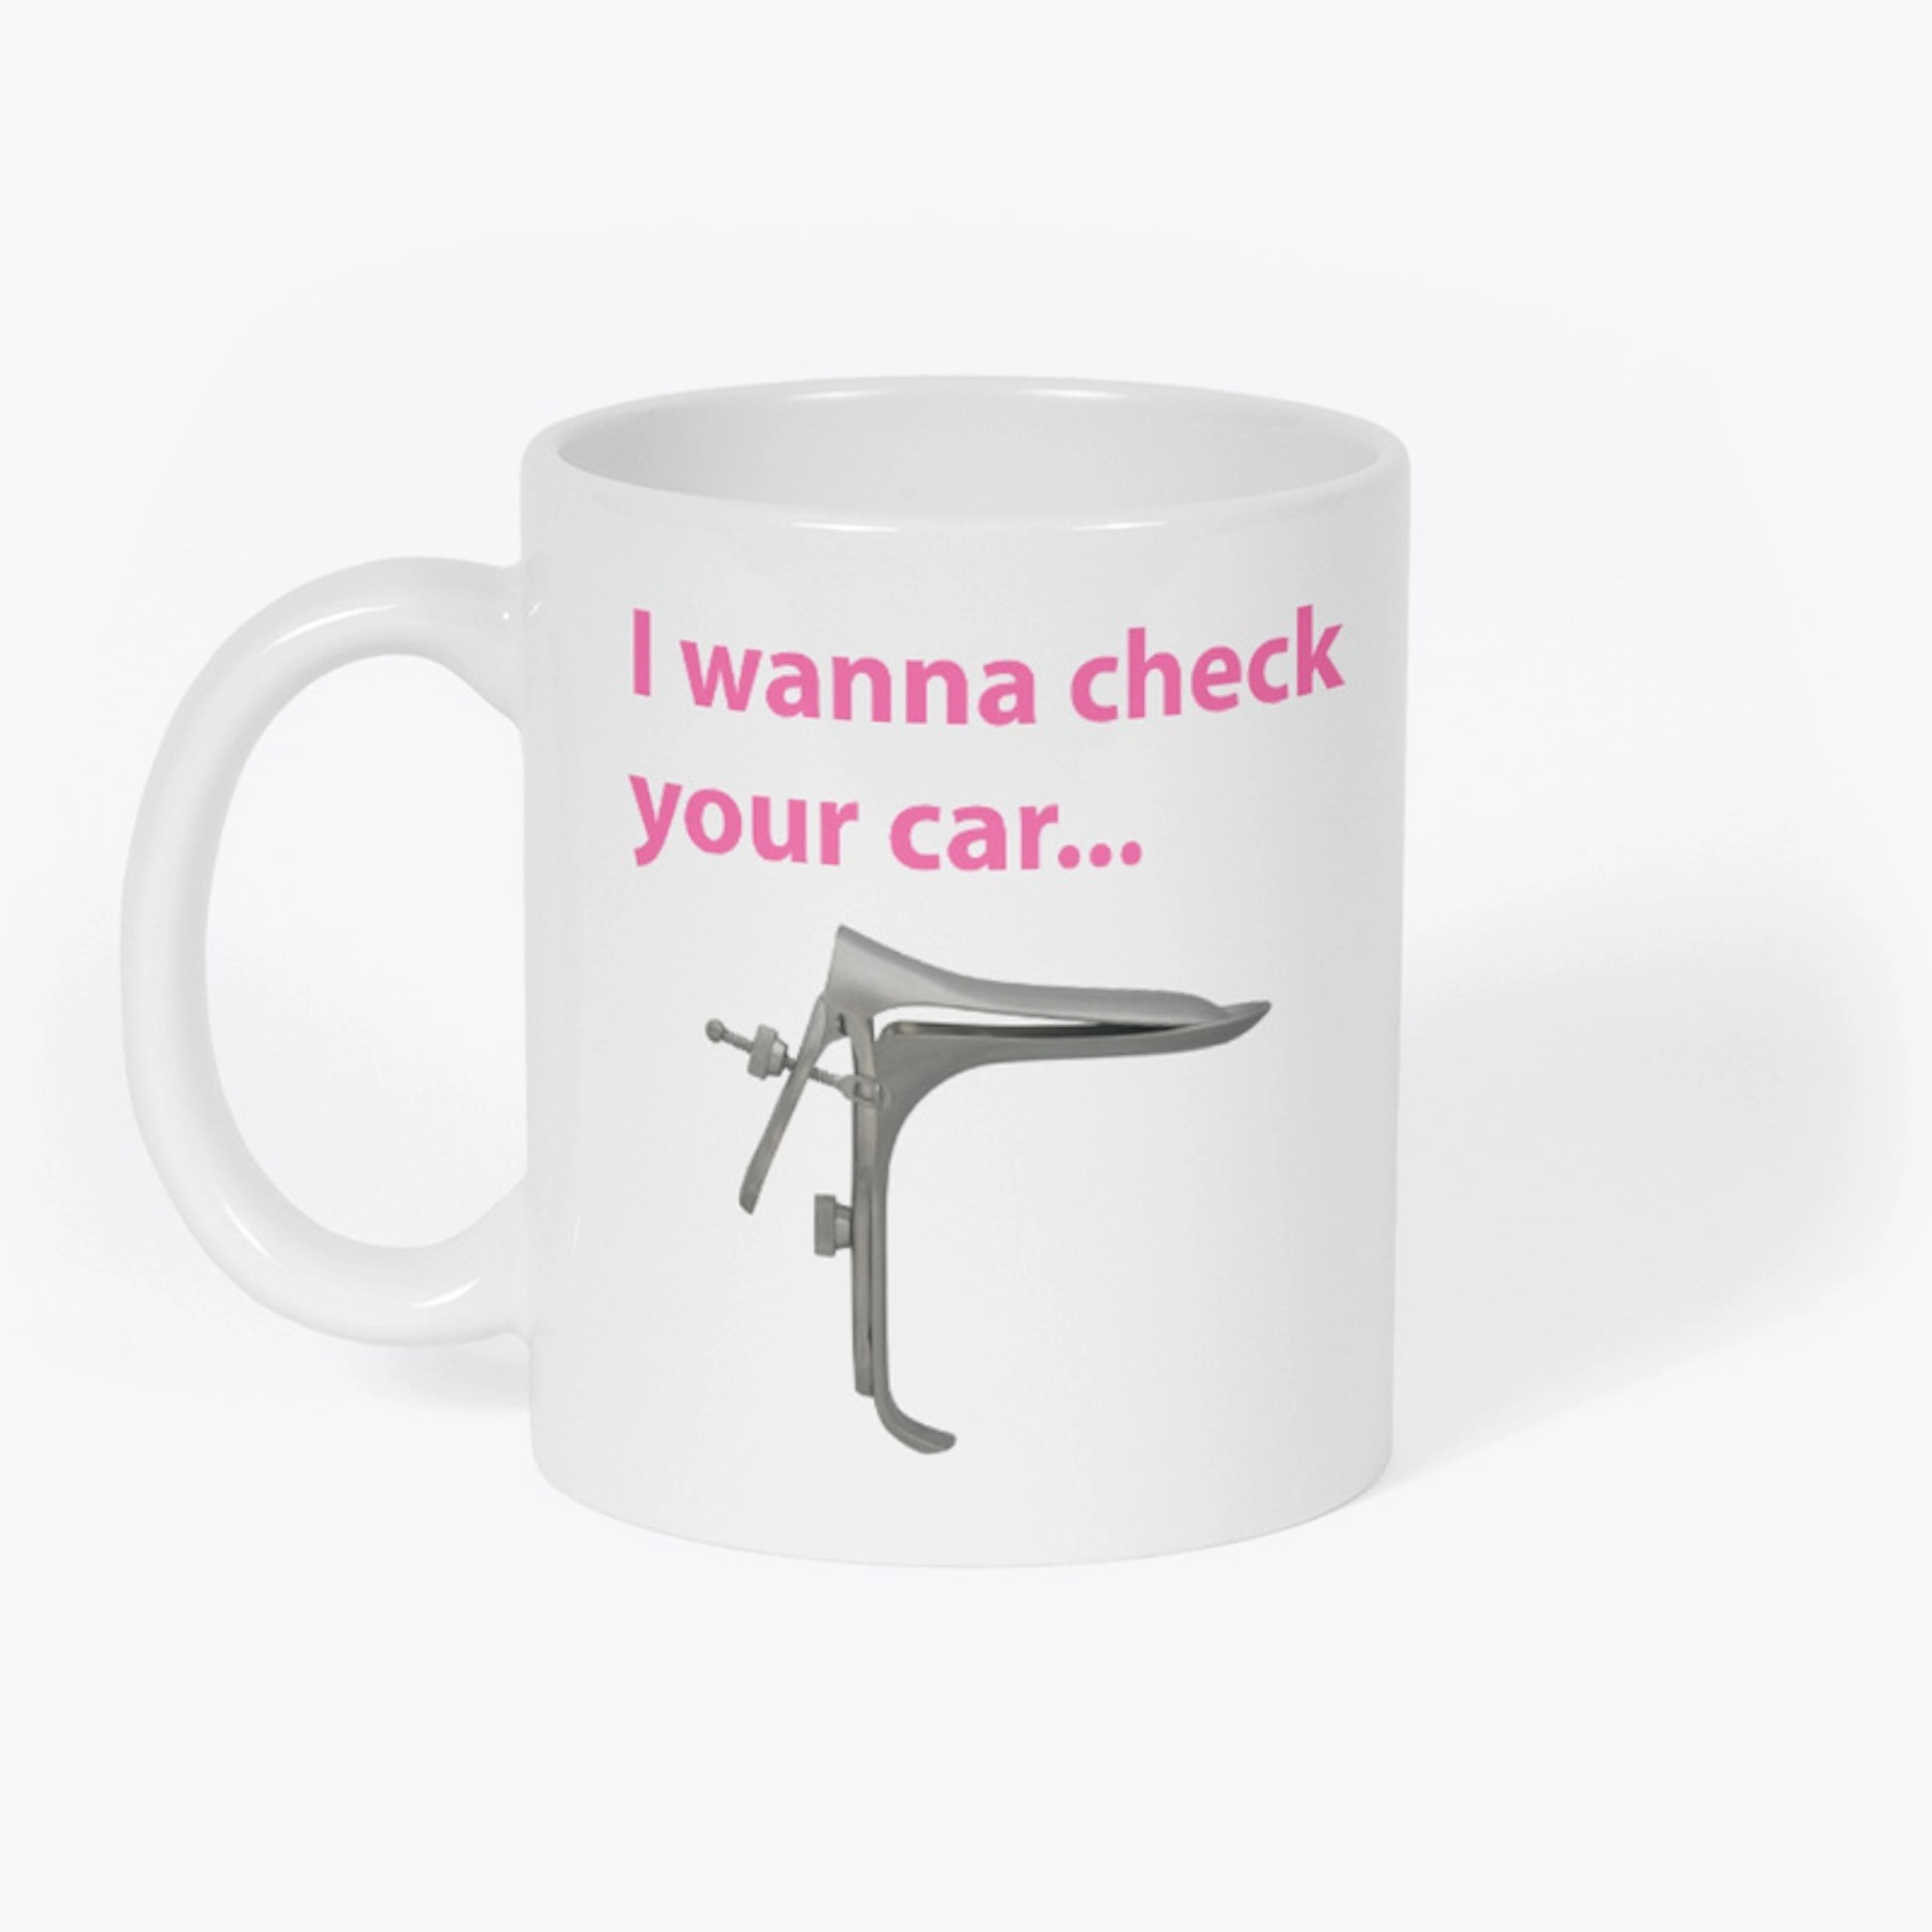 I wanna check your car...